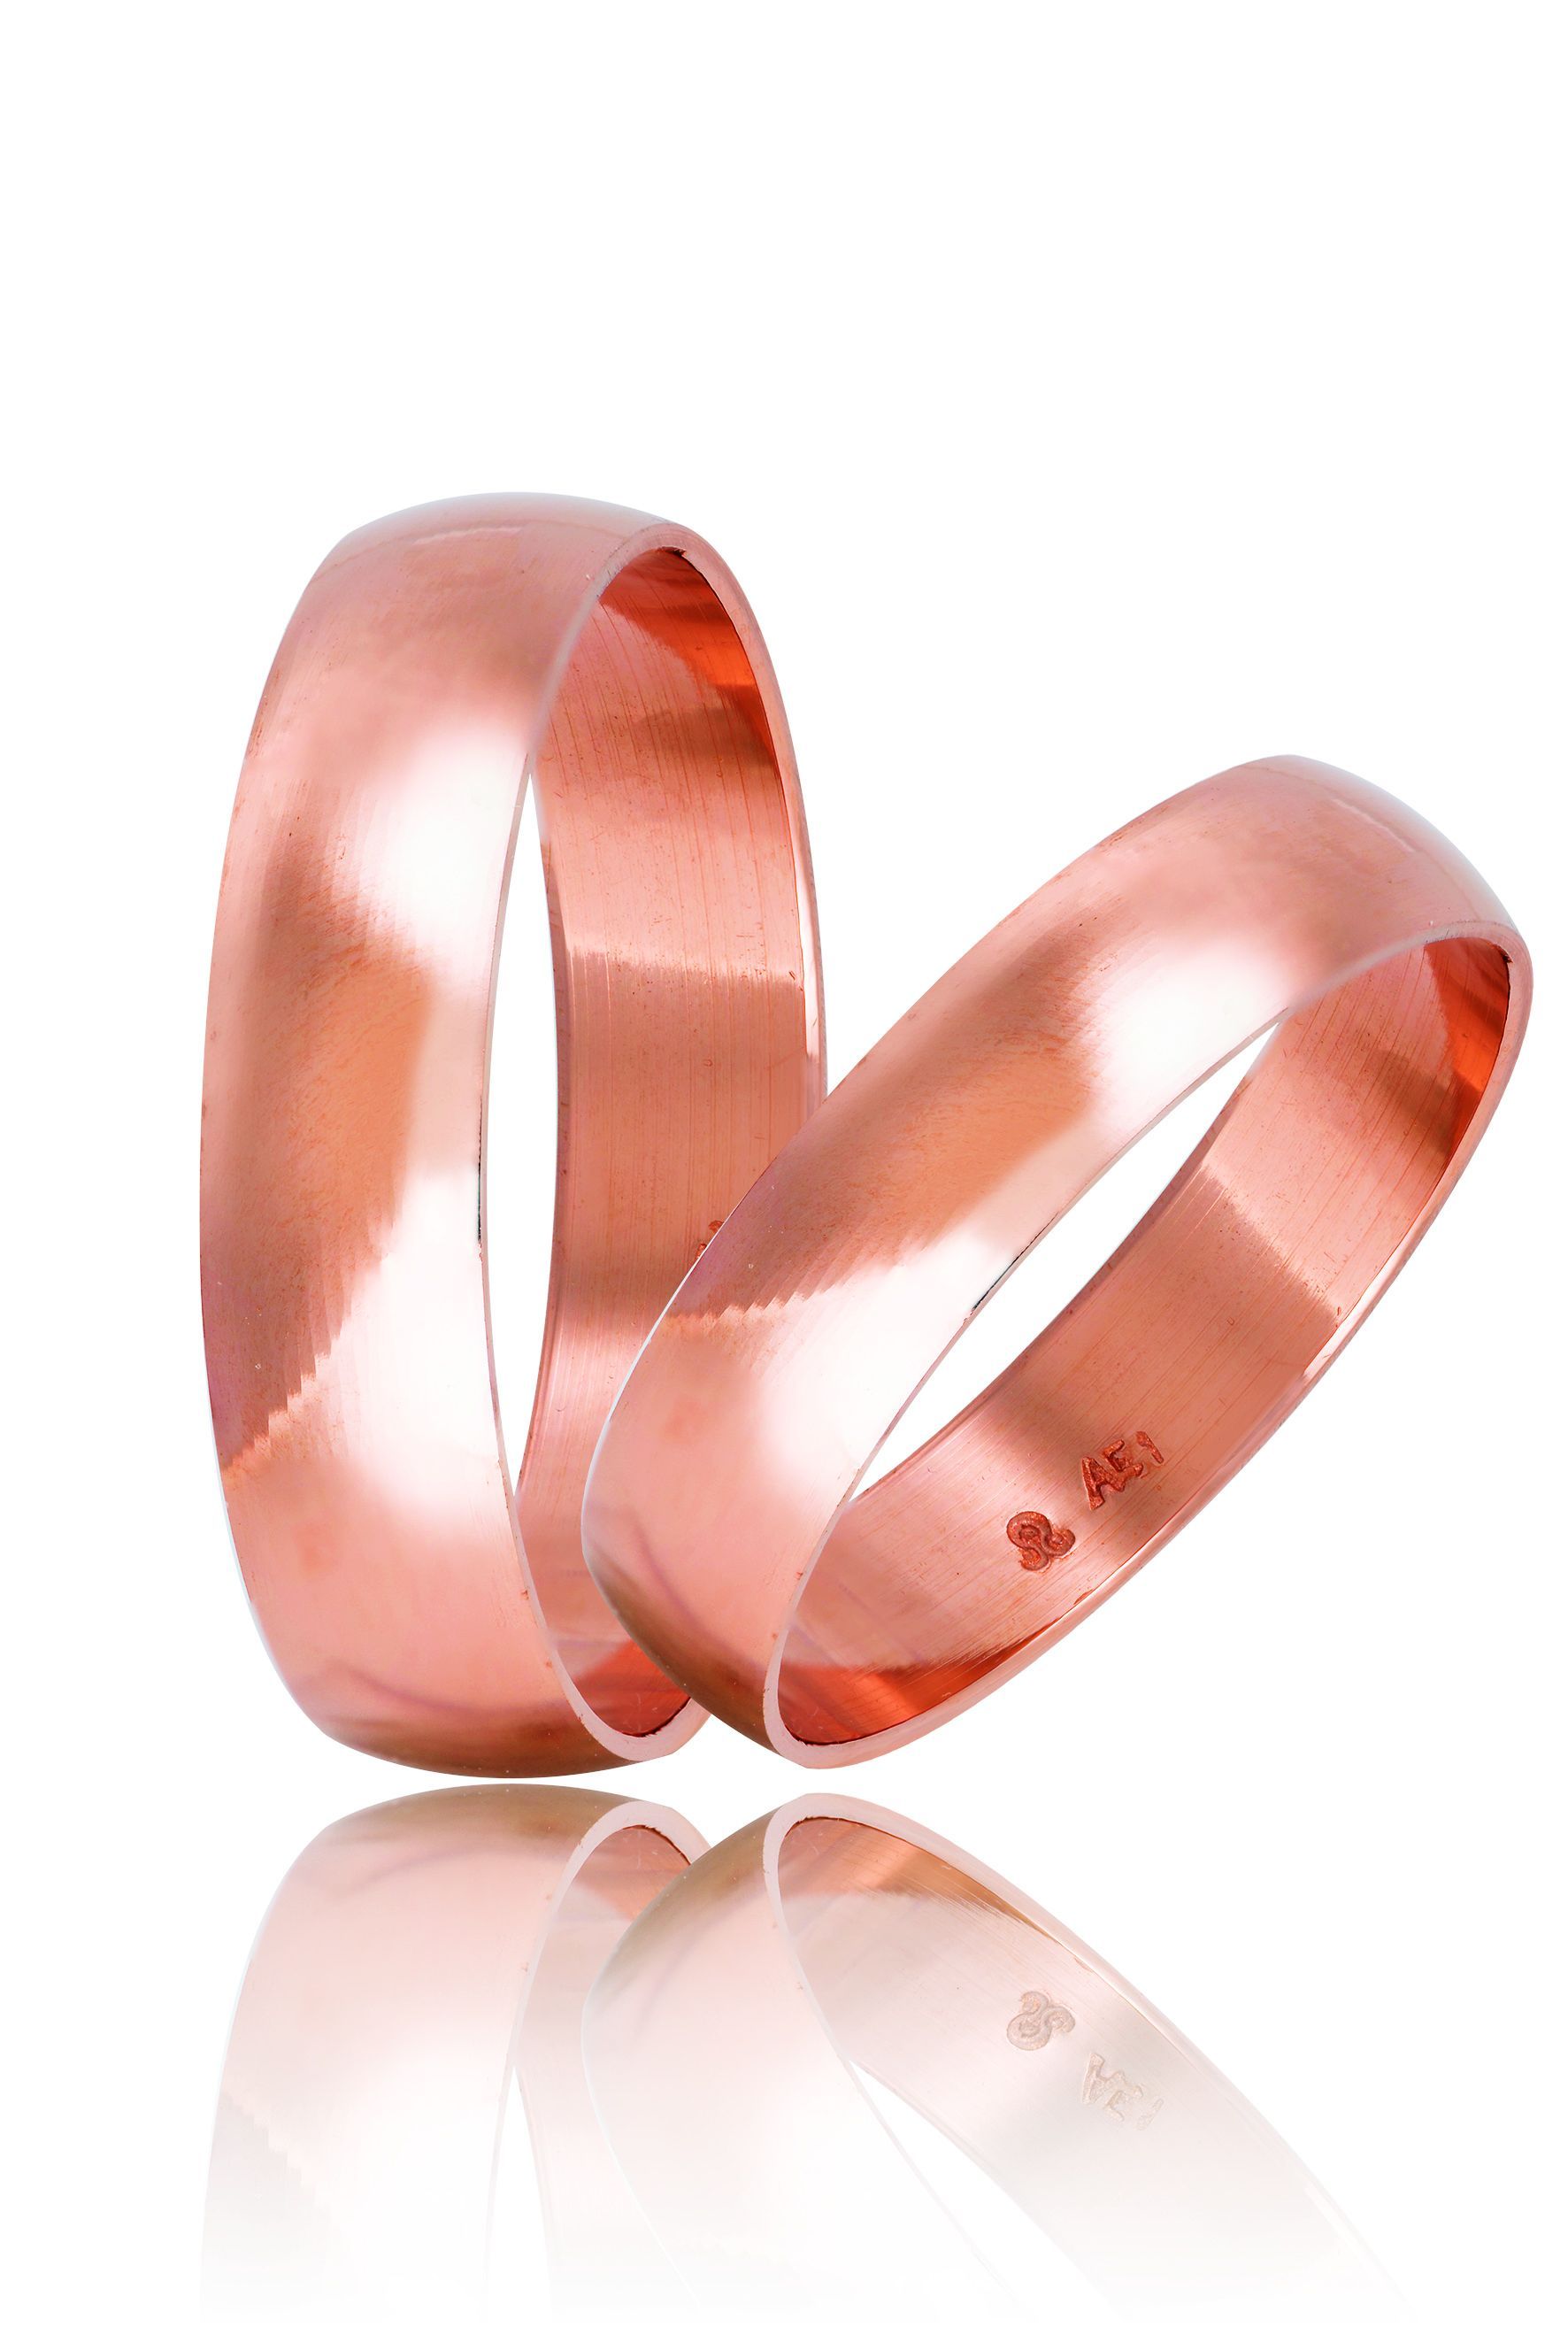 Rose gold wedding rings 5mm (code HR3Ar).